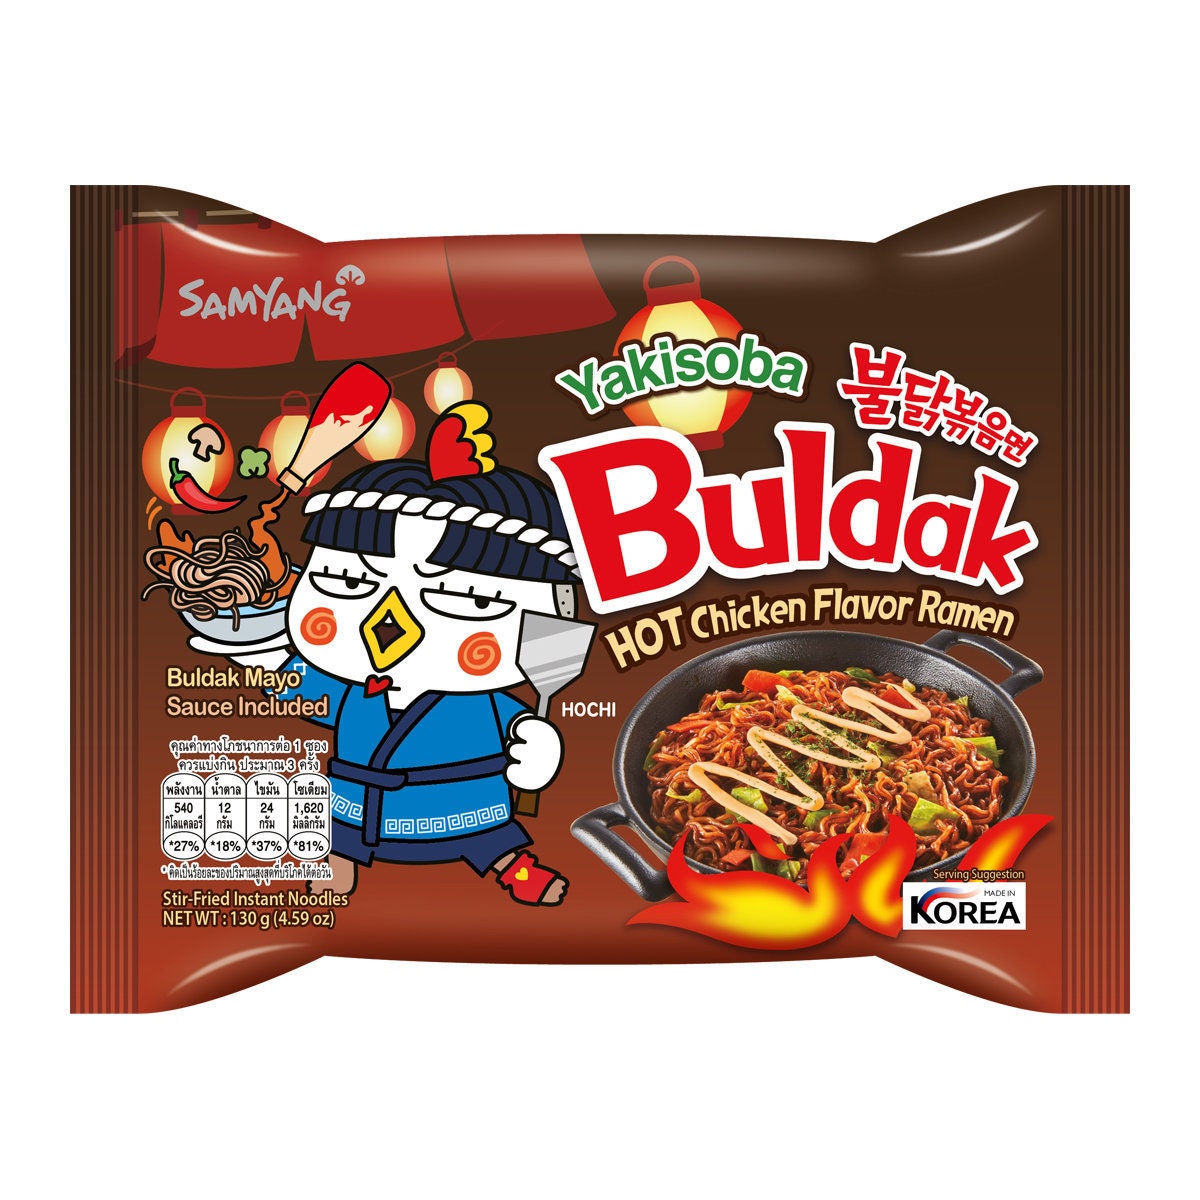 Samyang] Buldak Sauce Collection Buldak Sauce/Carbo Buldak/Buldak Mayo/ Buldak Stick Sauce 5 Types - Now In Seoul